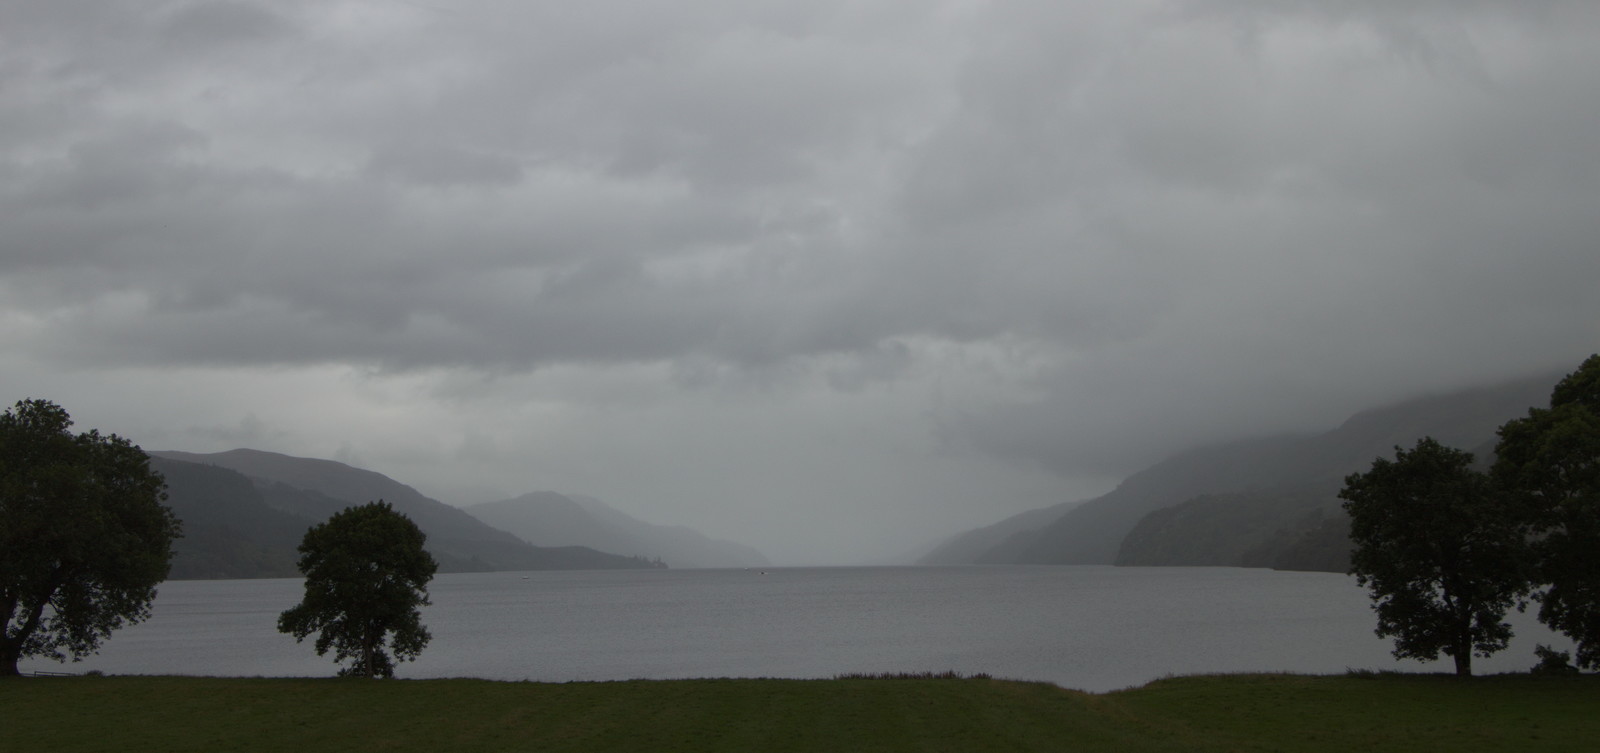 Pointe sud du Loch Ness